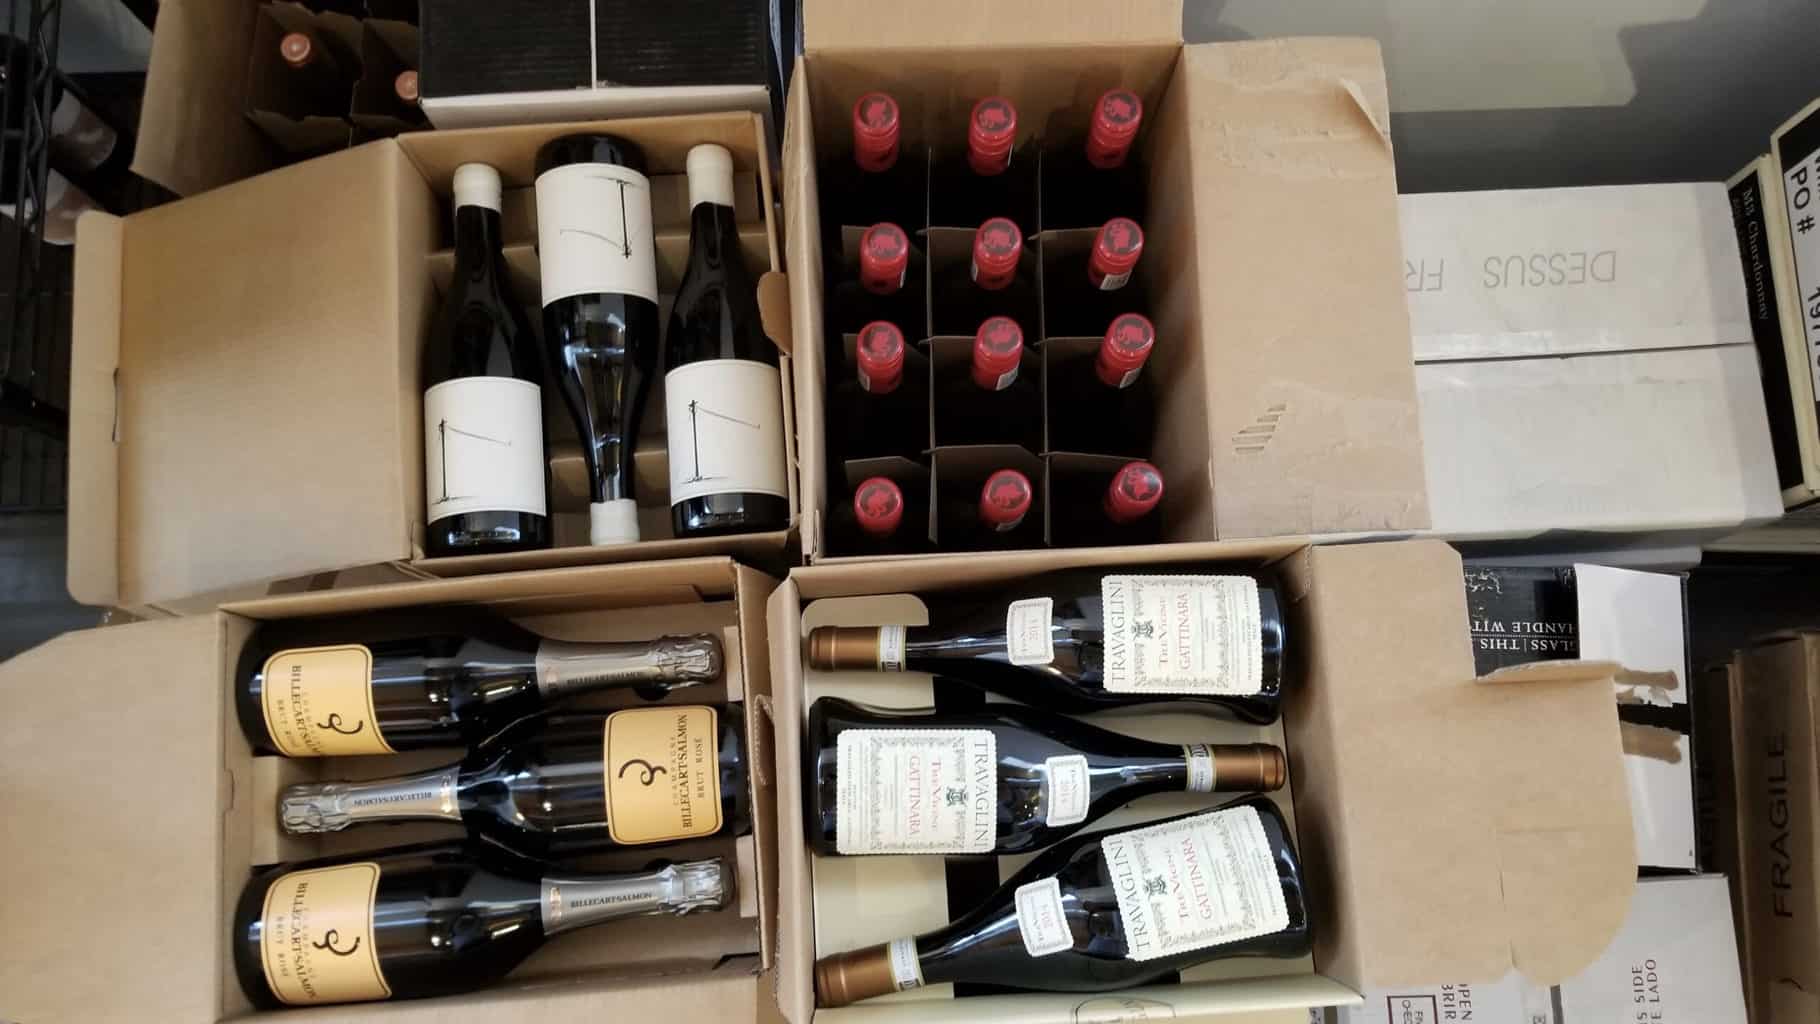 open cases of wine